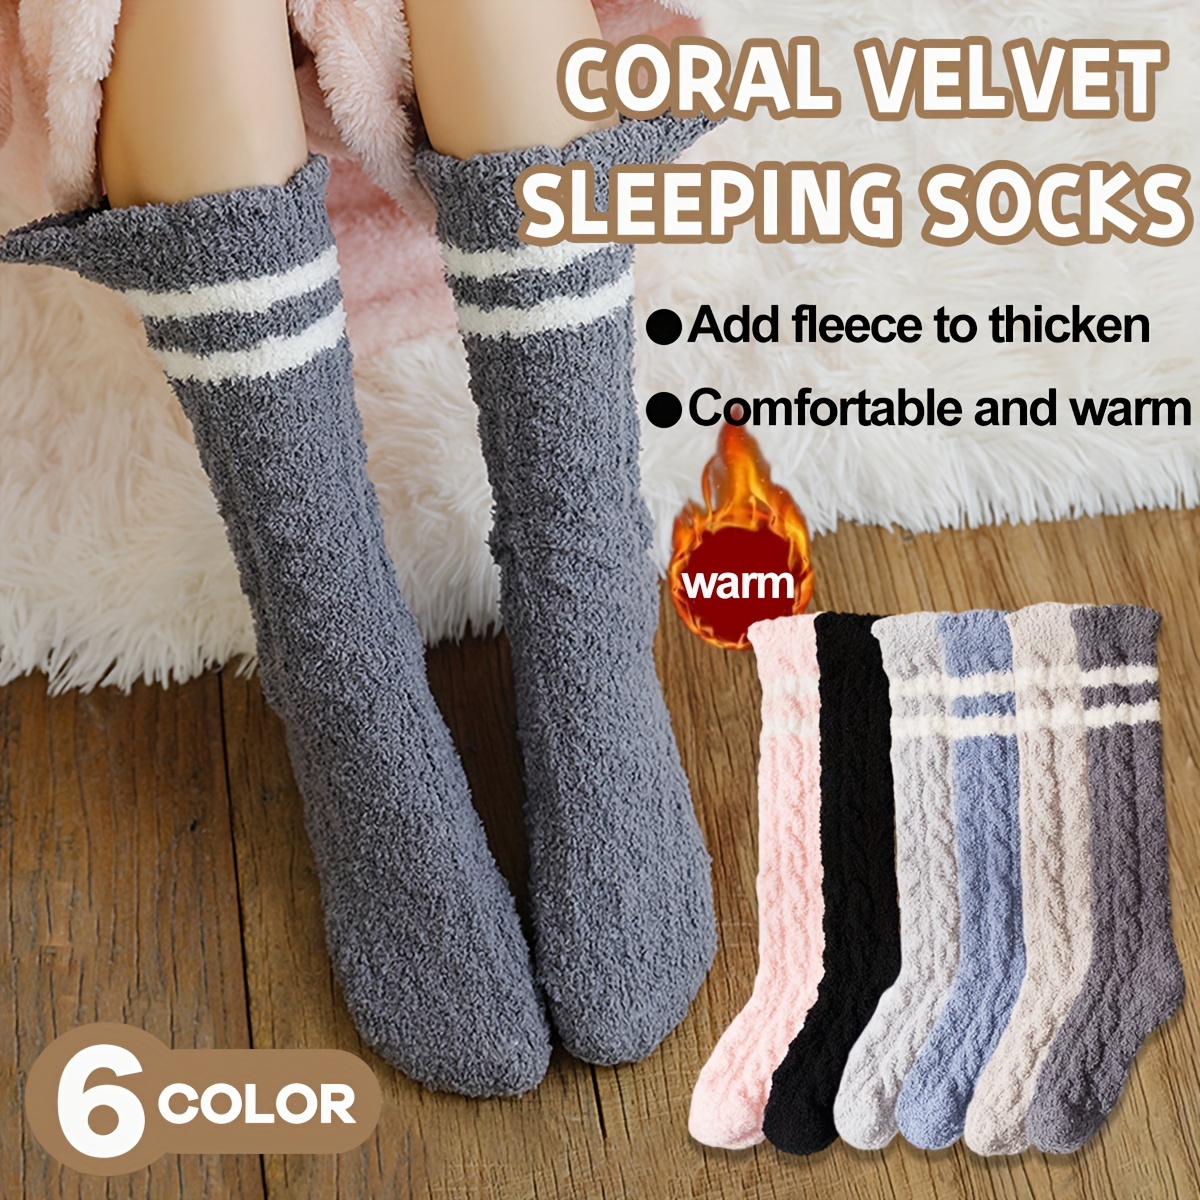 5 Pairs Mens Fuzzy Socks, Warm Winter Fluffy Cozy Fleece Socks For Men Soft  Home Sleeping Socks